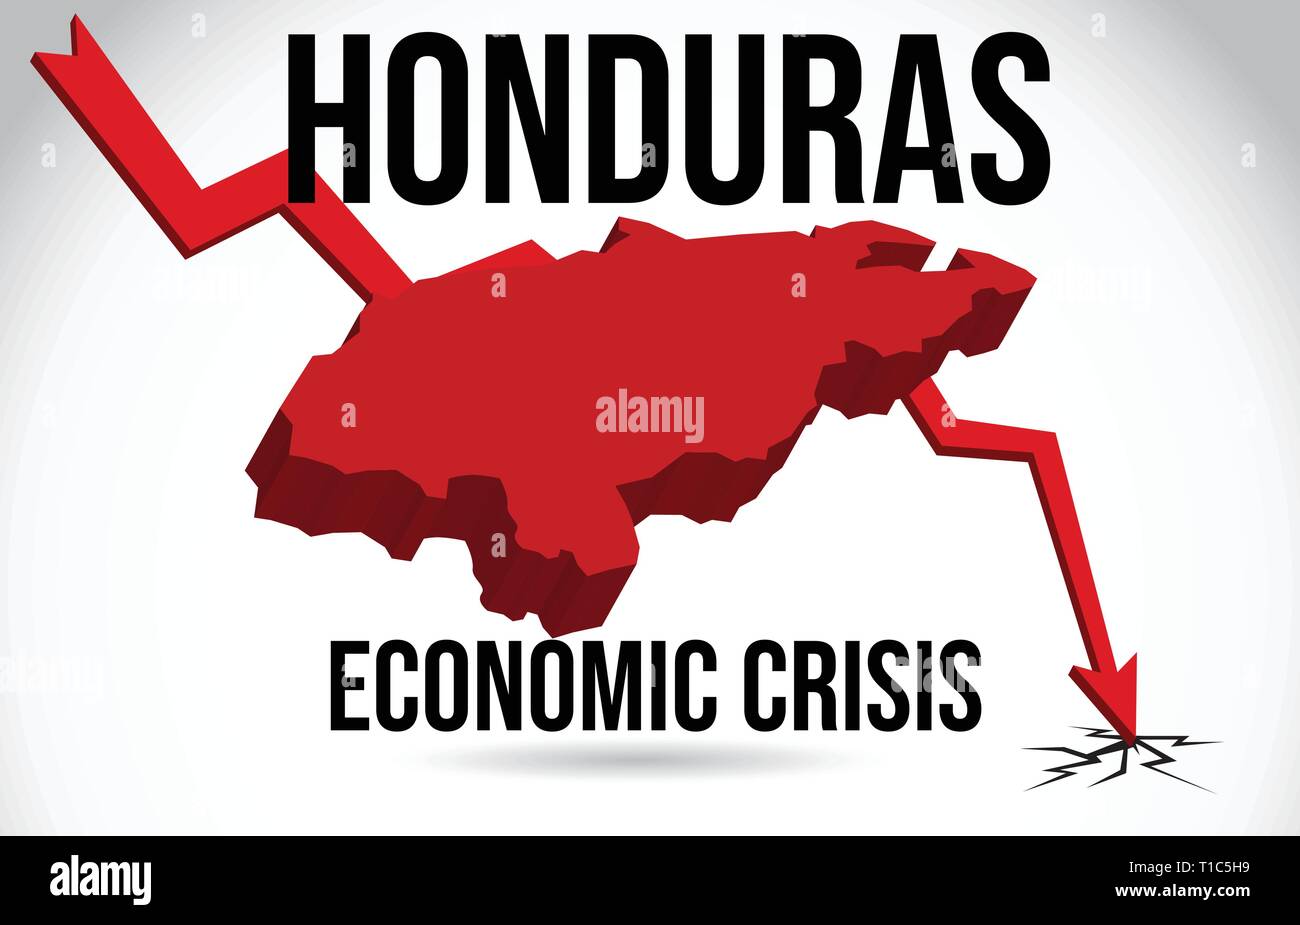 Honduras Map Financial Crisis Economic Collapse Market Crash Global Meltdown Vector Illustration. Stock Vector